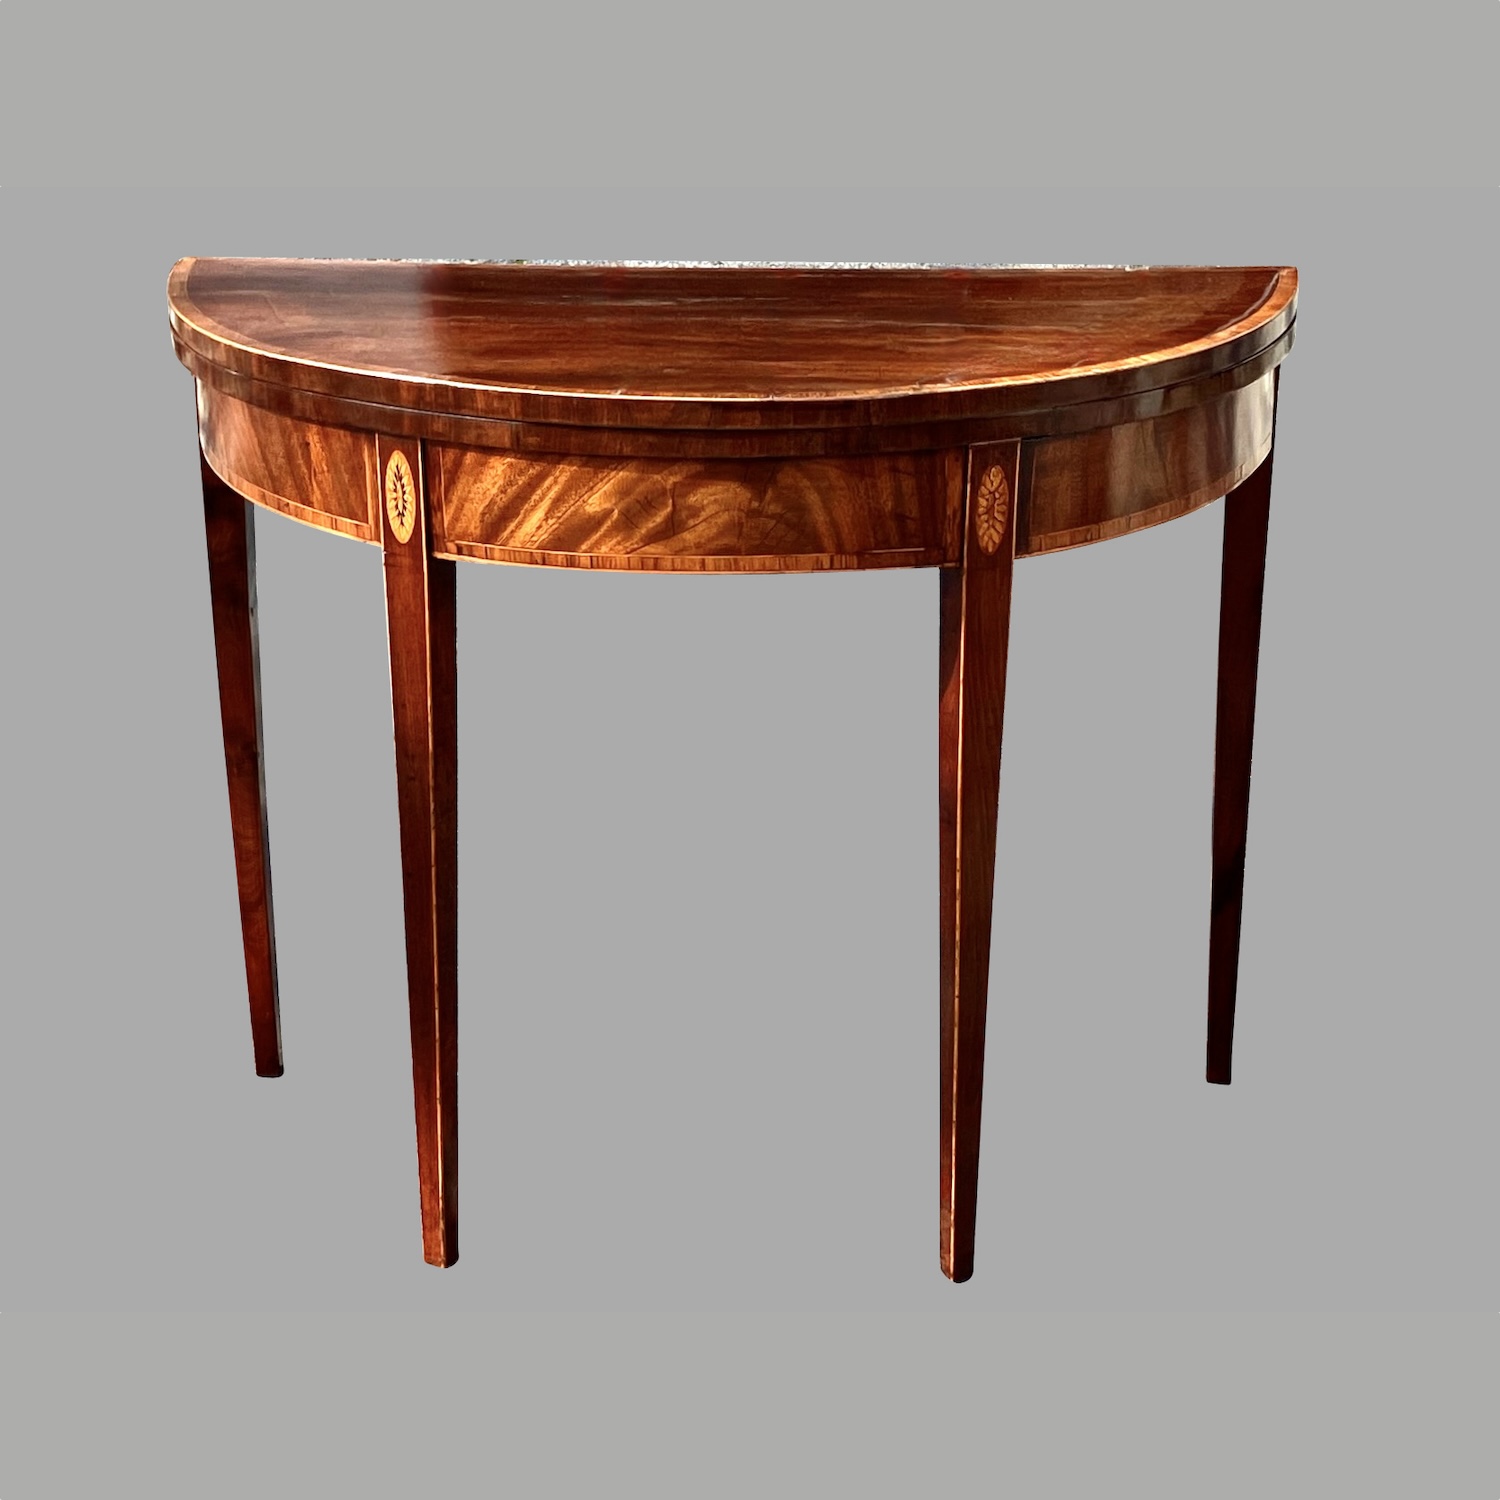 english-hepplewhite-satinwood-inlaid-mahogany-demilune-games-table-circa-1790-c423-11